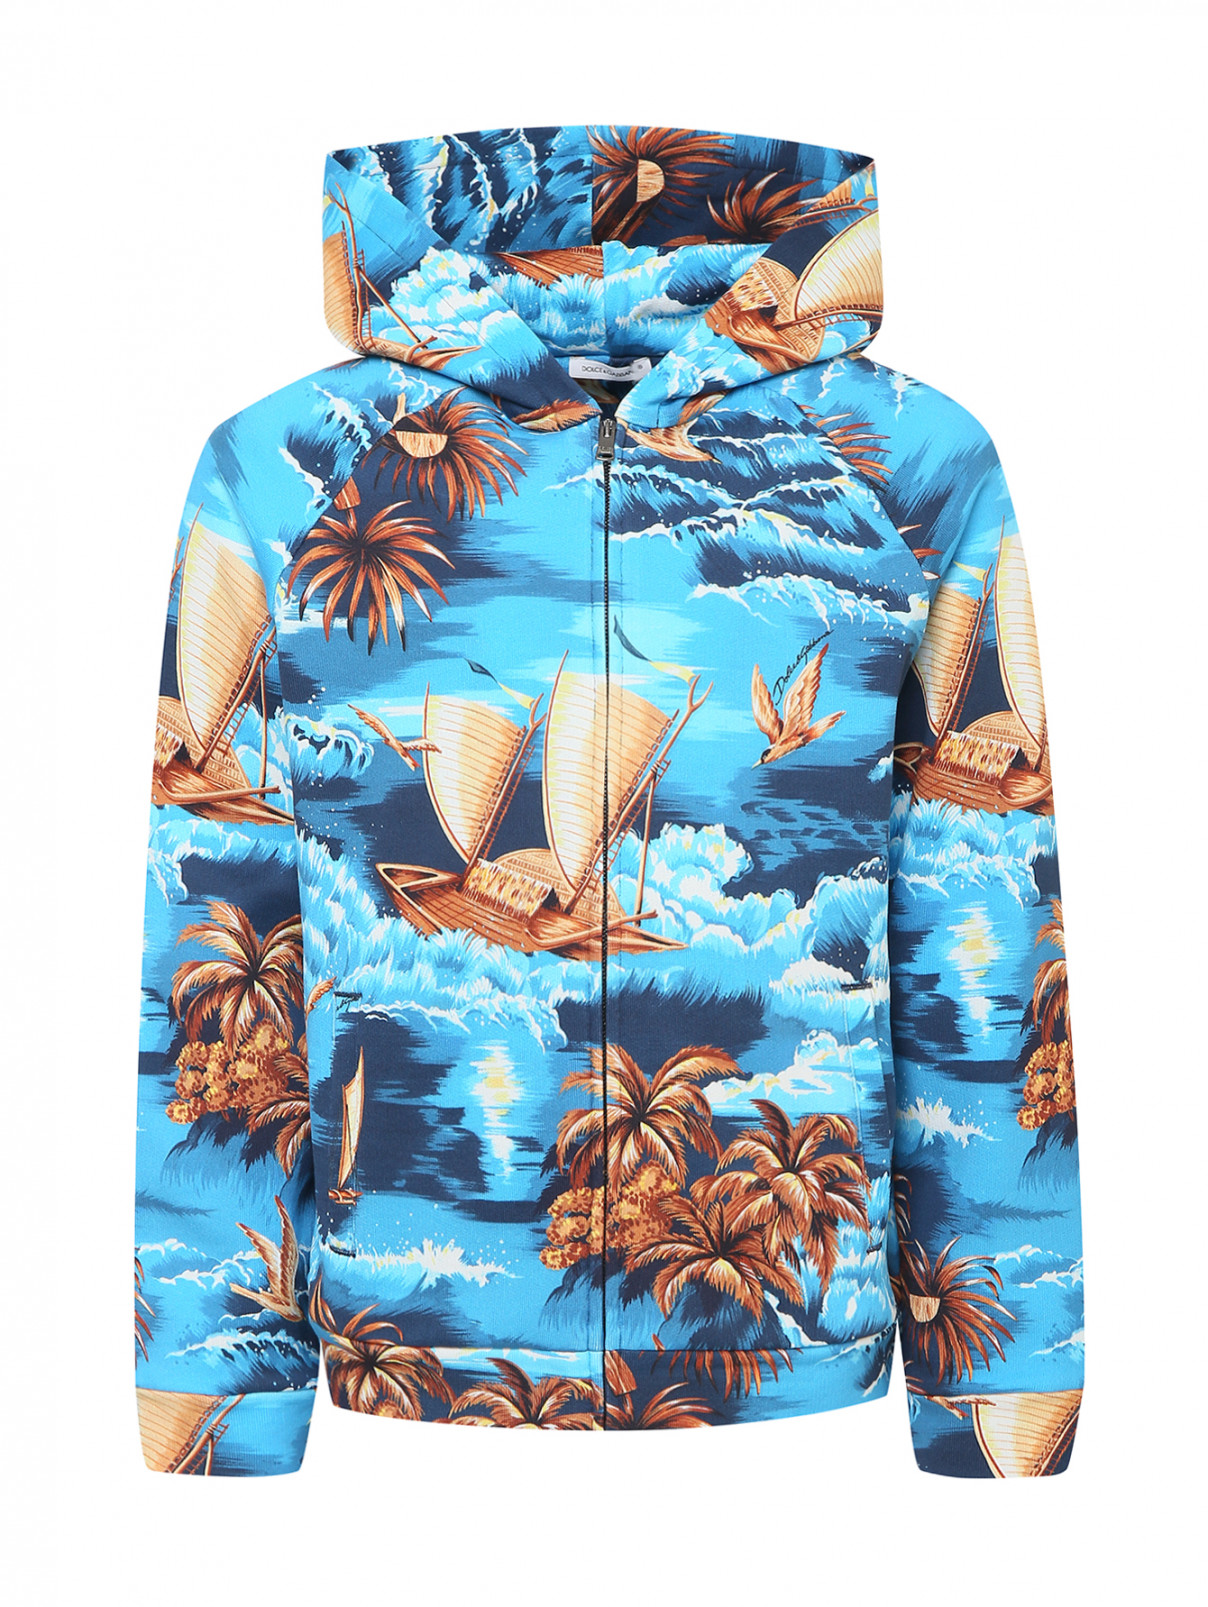 Толстовка с морским узором Dolce & Gabbana  –  Общий вид  – Цвет:  Узор